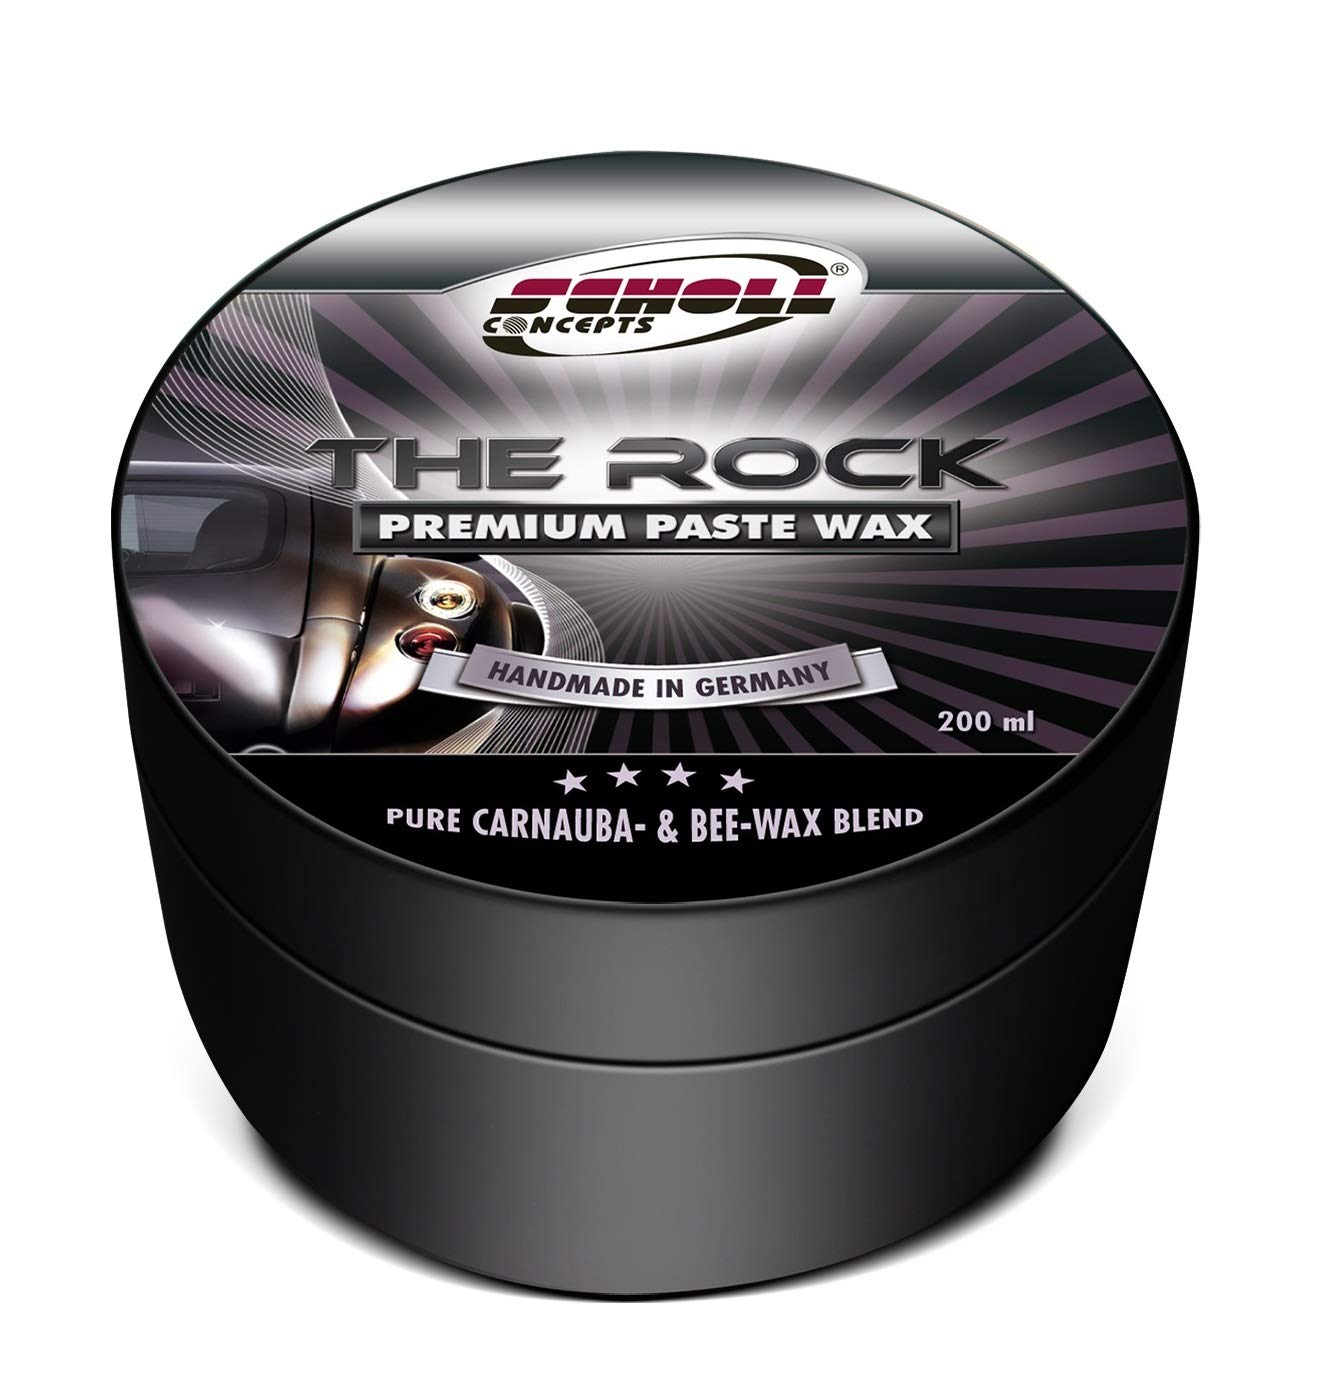 Scholl Concepts The Rock | 200ml | Premium Carnauba-Wachs | Lotus-Effekt | Handgefertigt in Remseck, Germany | 40g Carnauba-Wachs pro Dose von Scholl Concepts